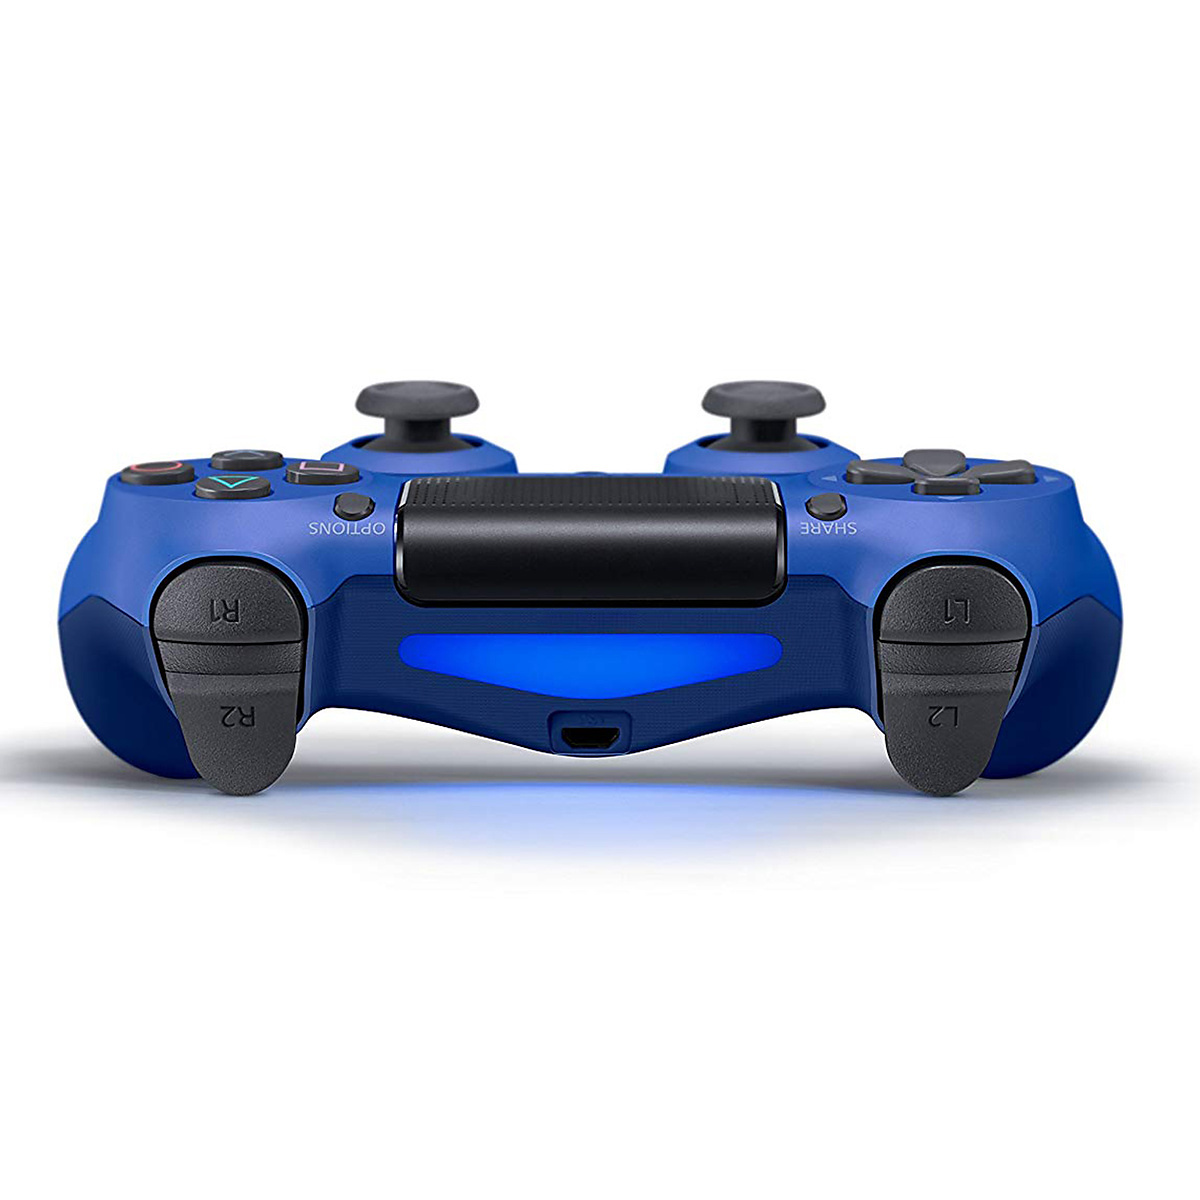 PS4 trådlös handkontroll, blå